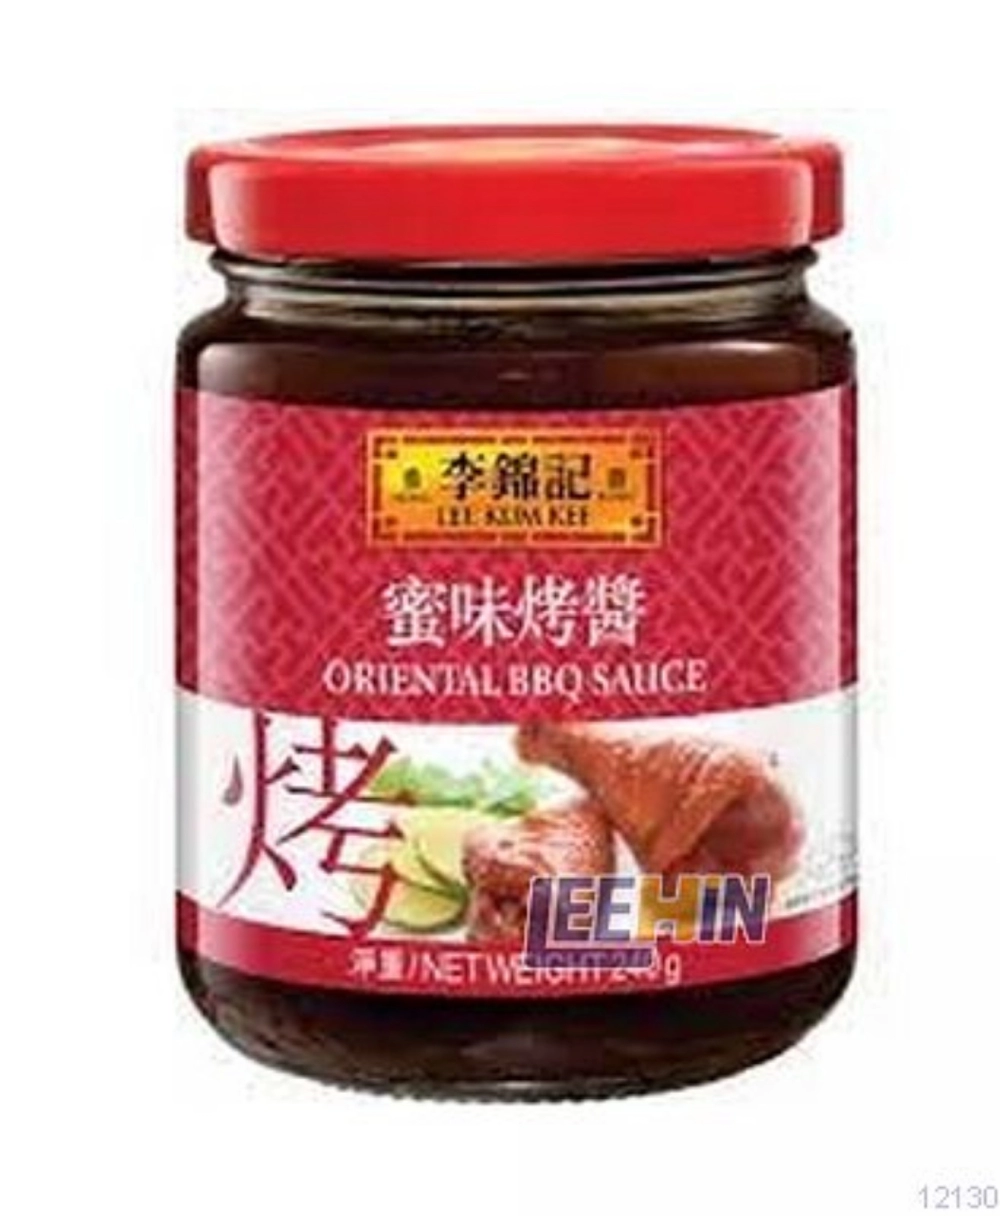 LKK Oriental BBQ (Botol Merah) 李锦记叉烧酱 240gm Lee Kum Kee  [12129 12130]